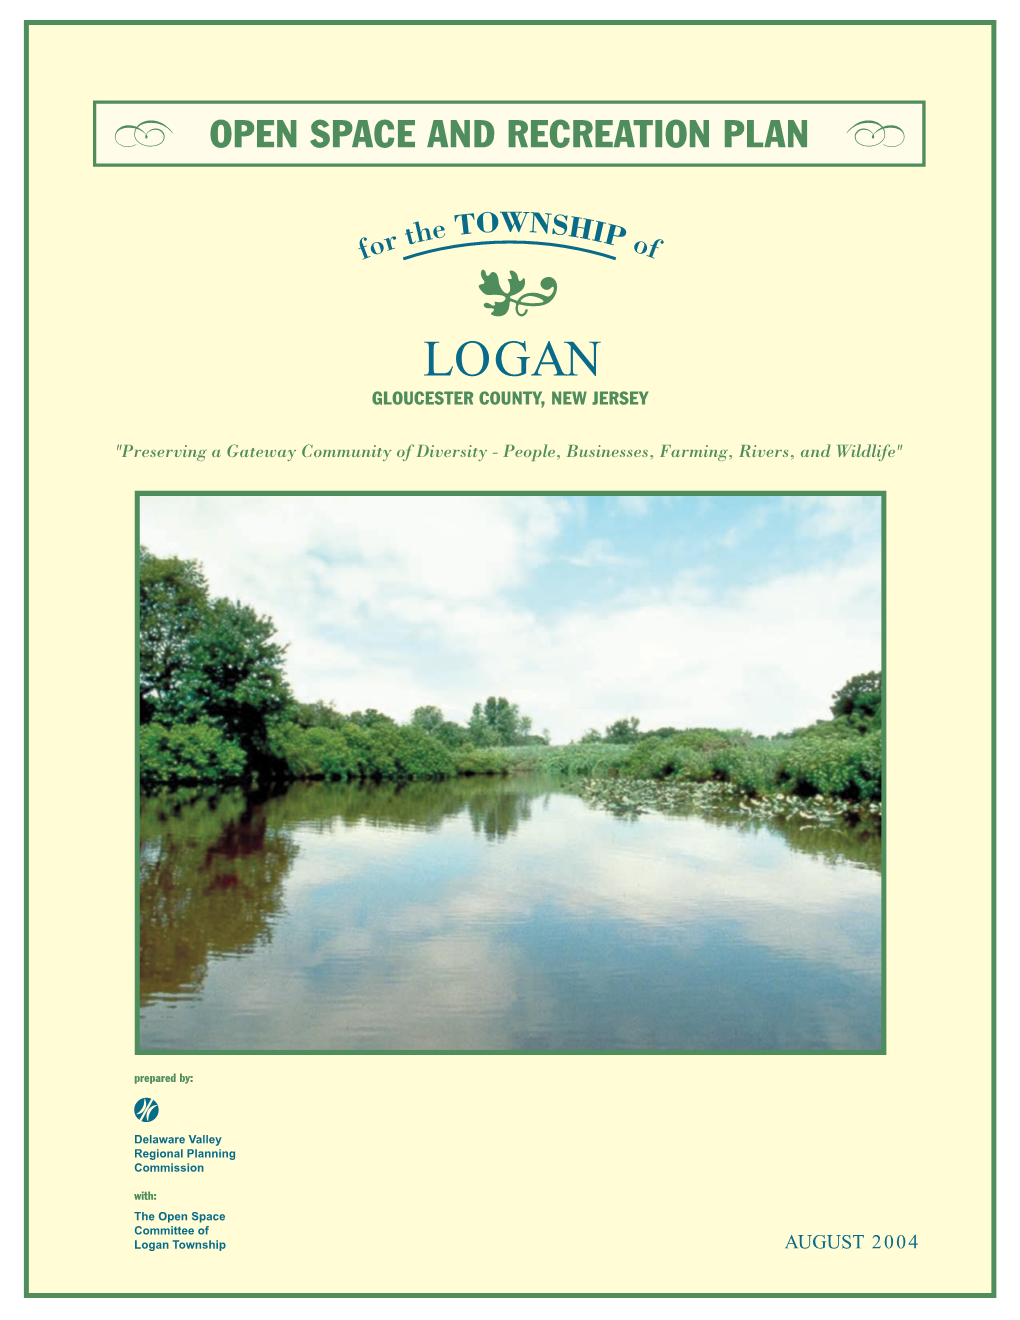 Open Space & Recreation Plan for Logan Township, Gloucester